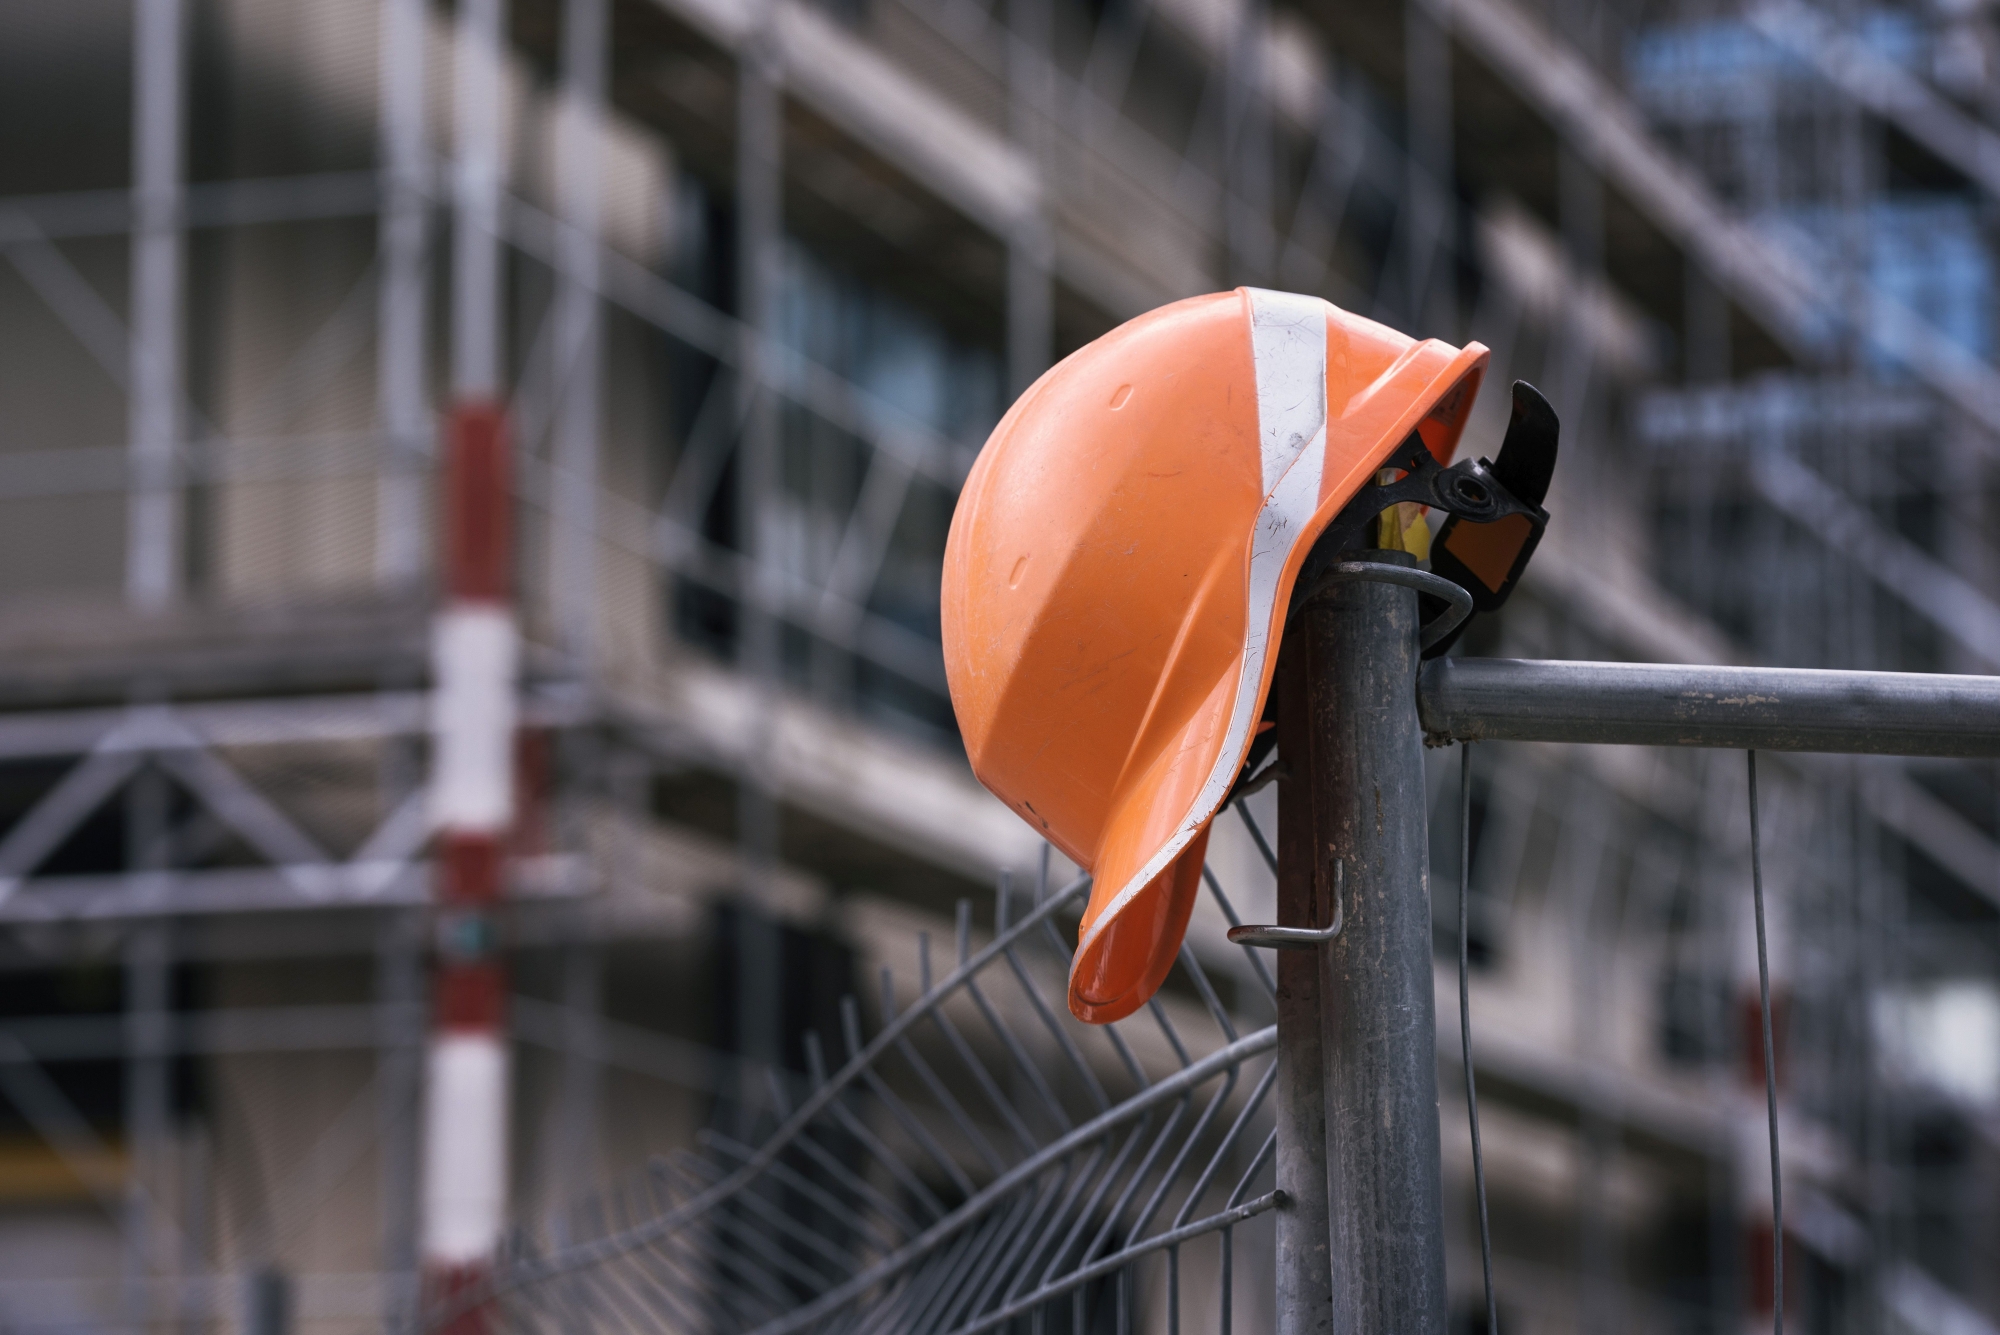 A helmet at the construction site "Glattpark" in Opfikon, a town in the district of Buelach, Canton of Zurich, Switzerland, pictured on January 19, 2018. (KEYSTONE/Christian Beutler) SCHWEIZ OPFIKON GLATTPARK BAUEN